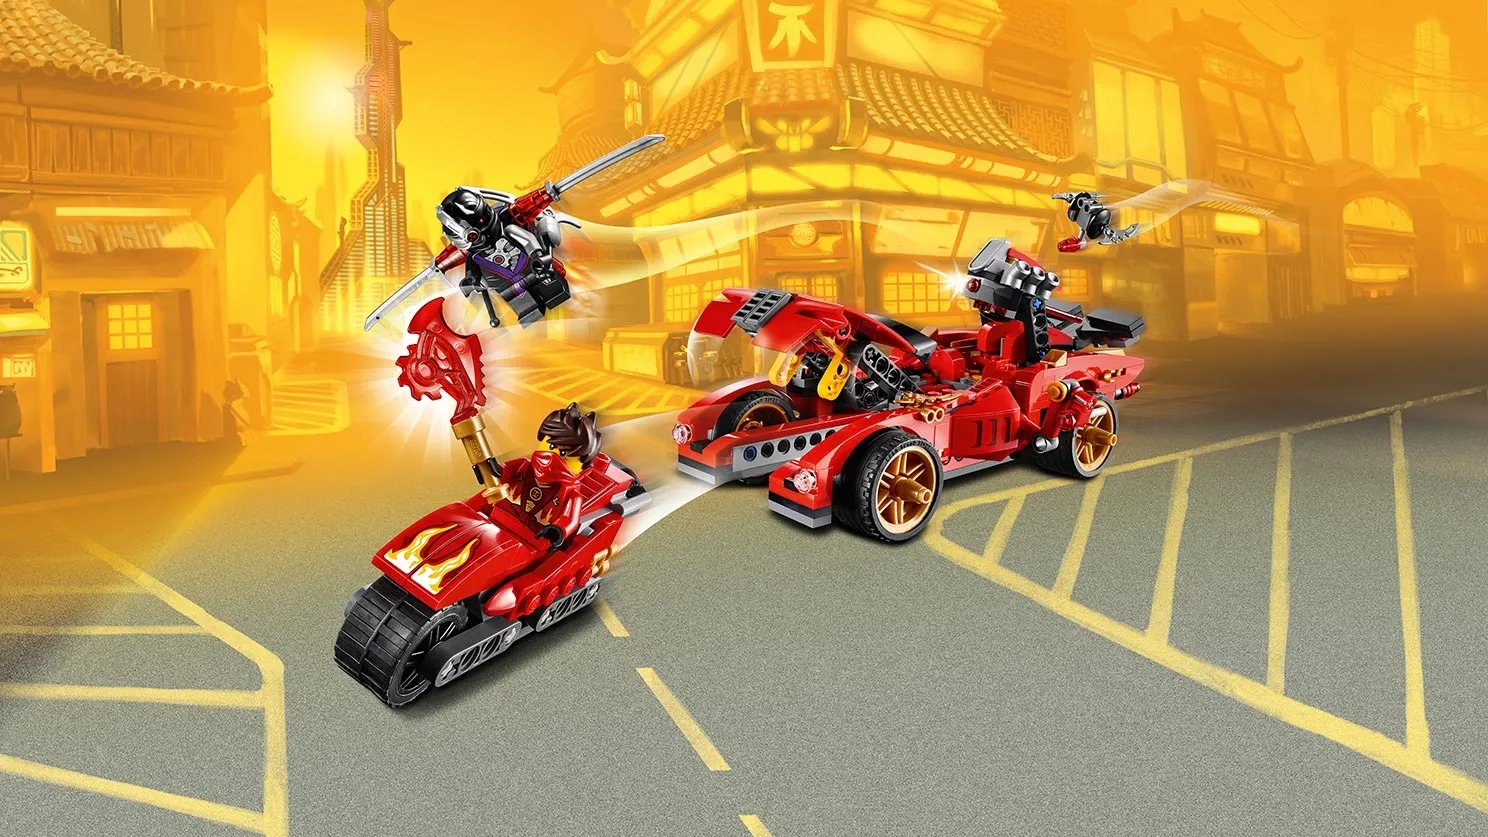 LEGO Ninjago X-1 Ninja Charger 